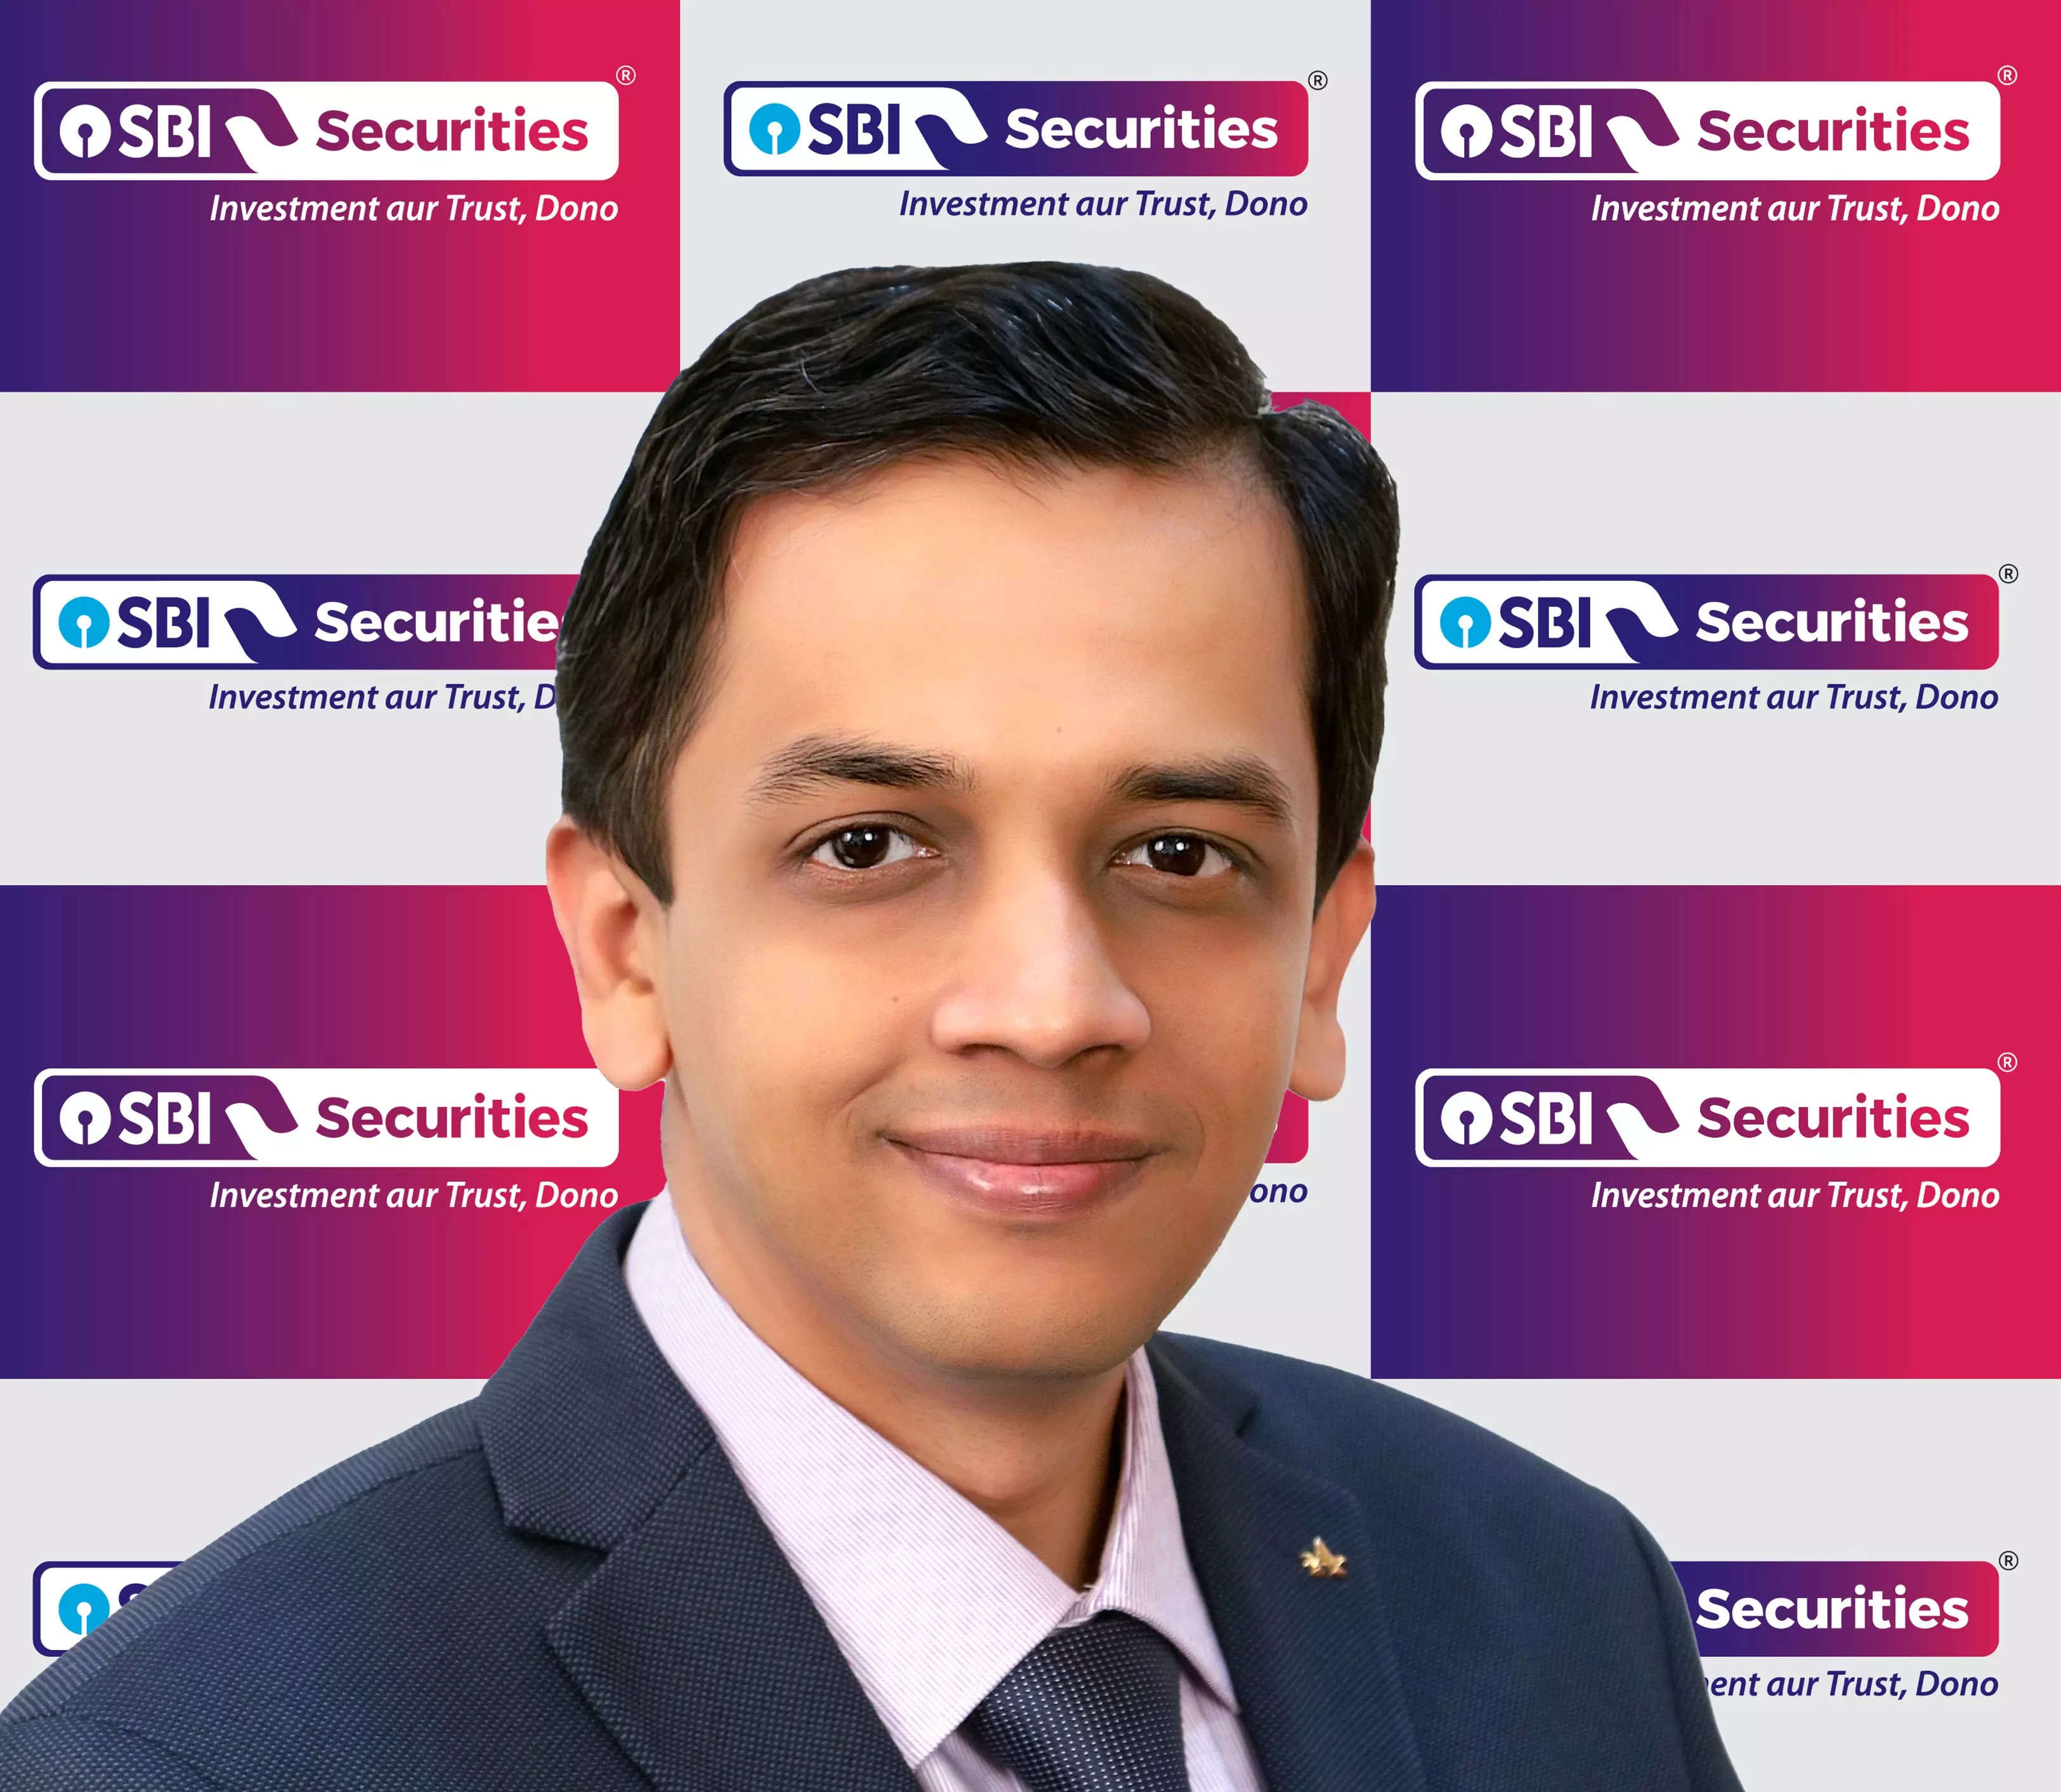 F&O Talk | Deploy bull spread in Nifty as FIIs highly net long: Sudeep Shah of SBI Securities 